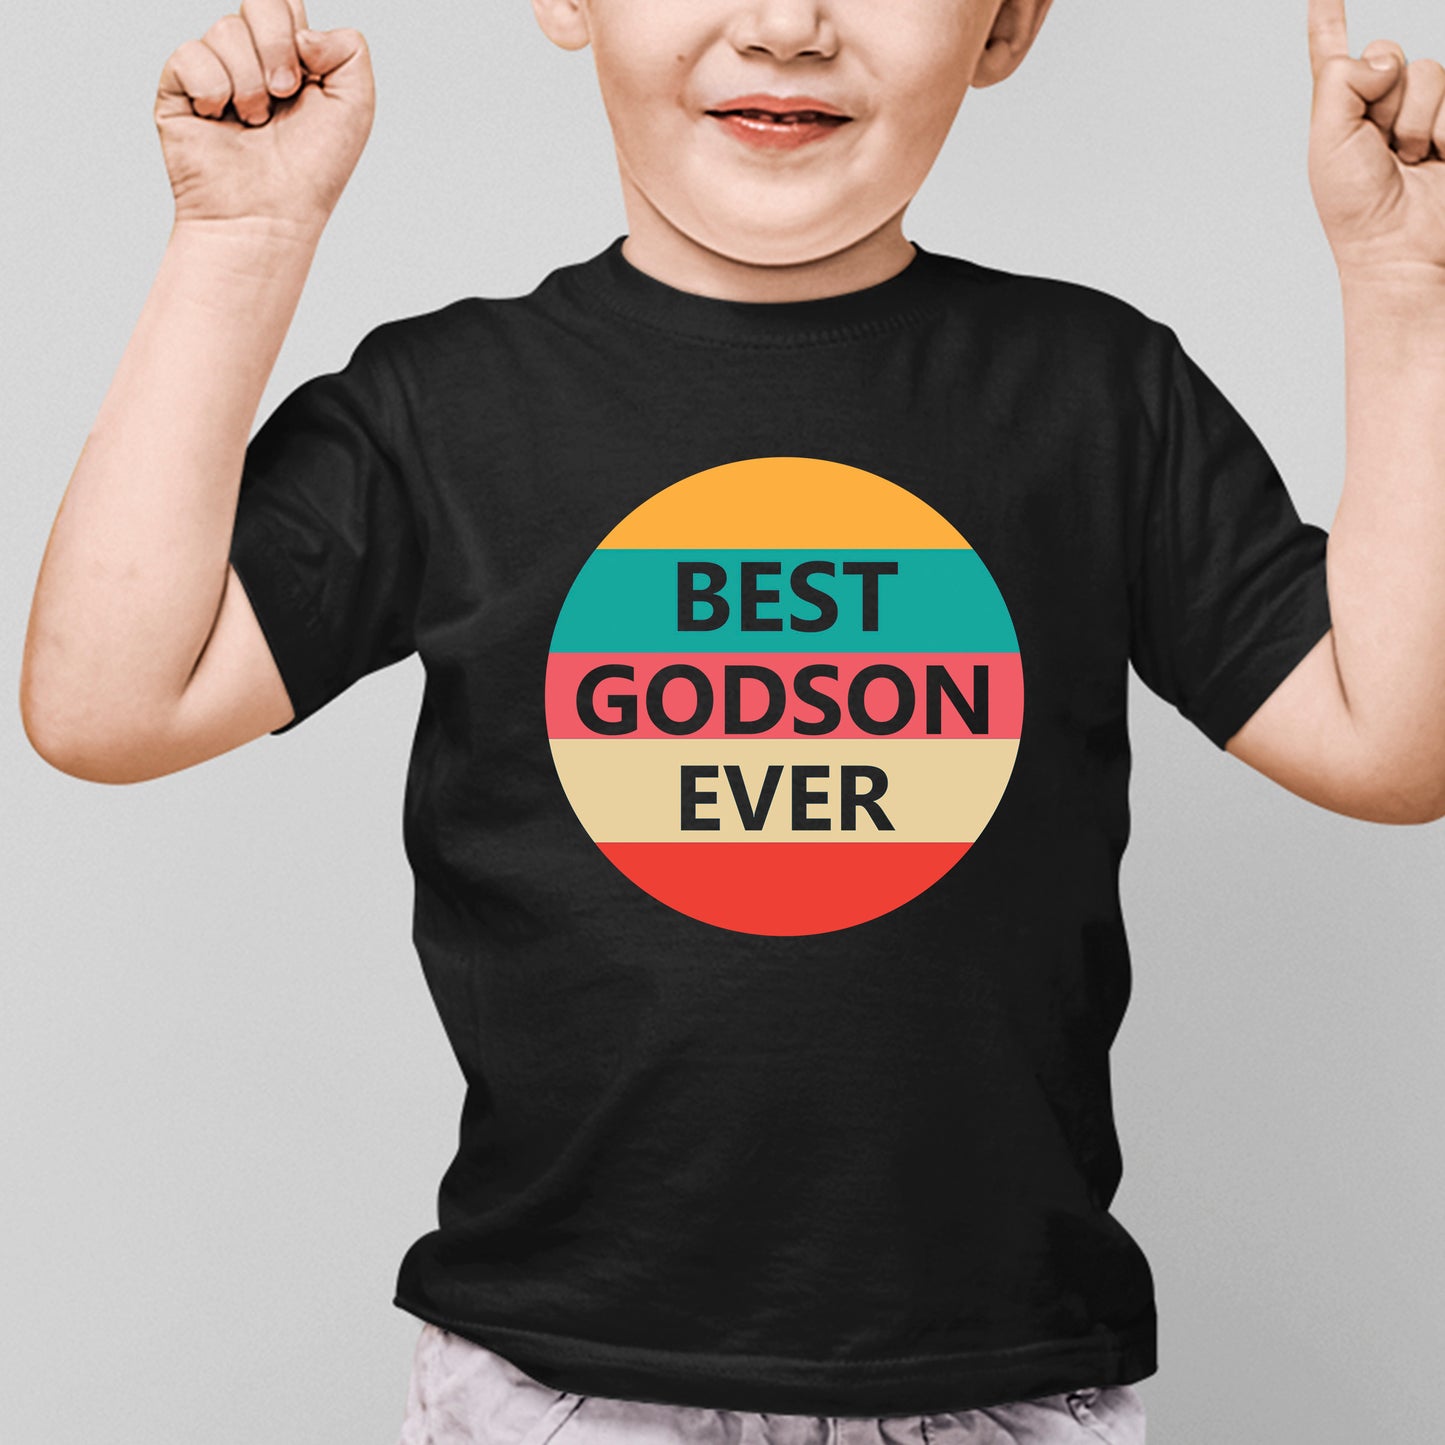 Best Godson Ever T-Shirt